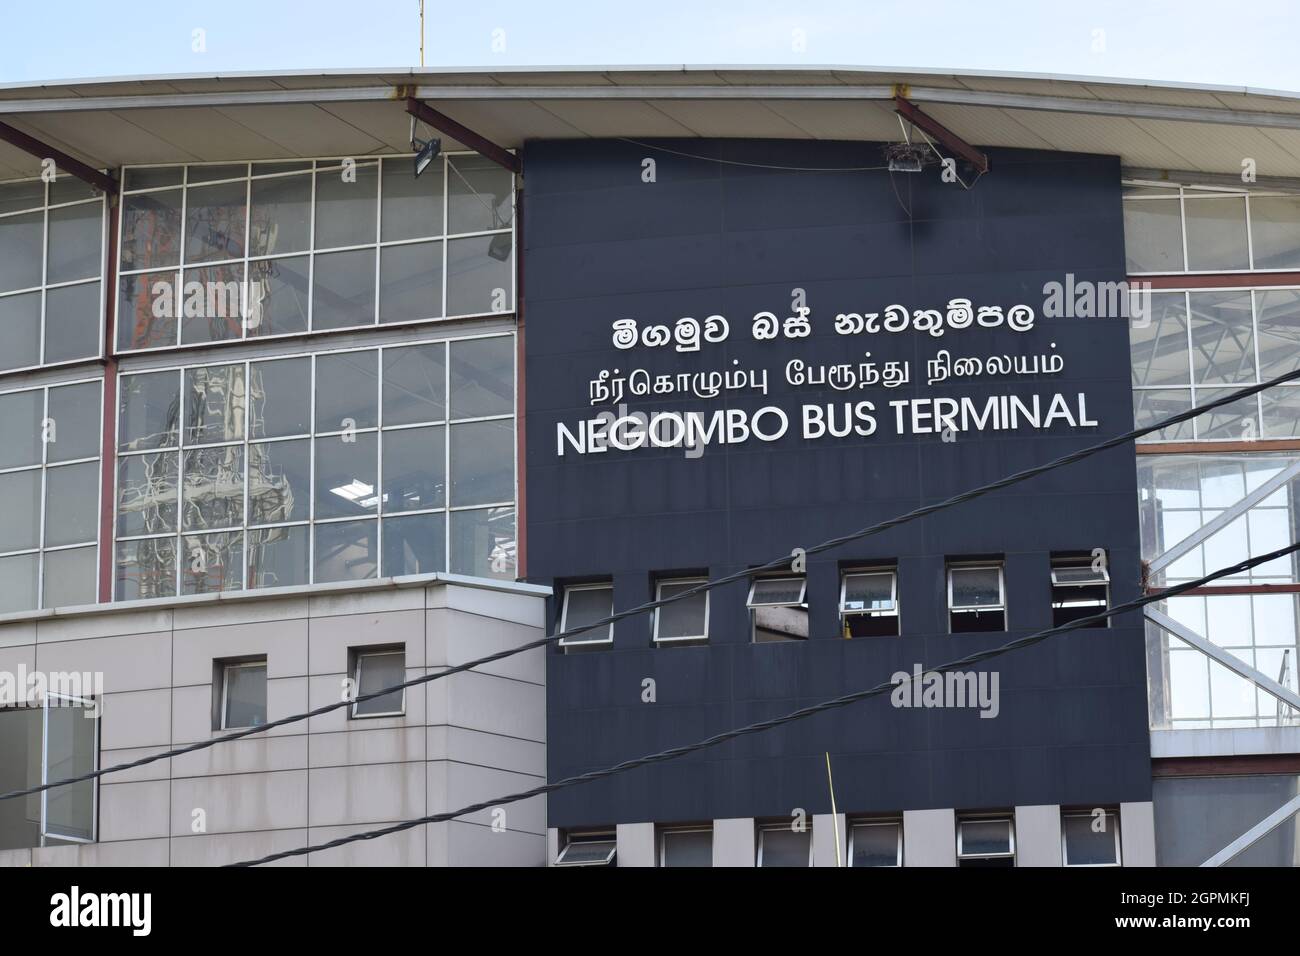 Negombo bus terminal Stock Photo